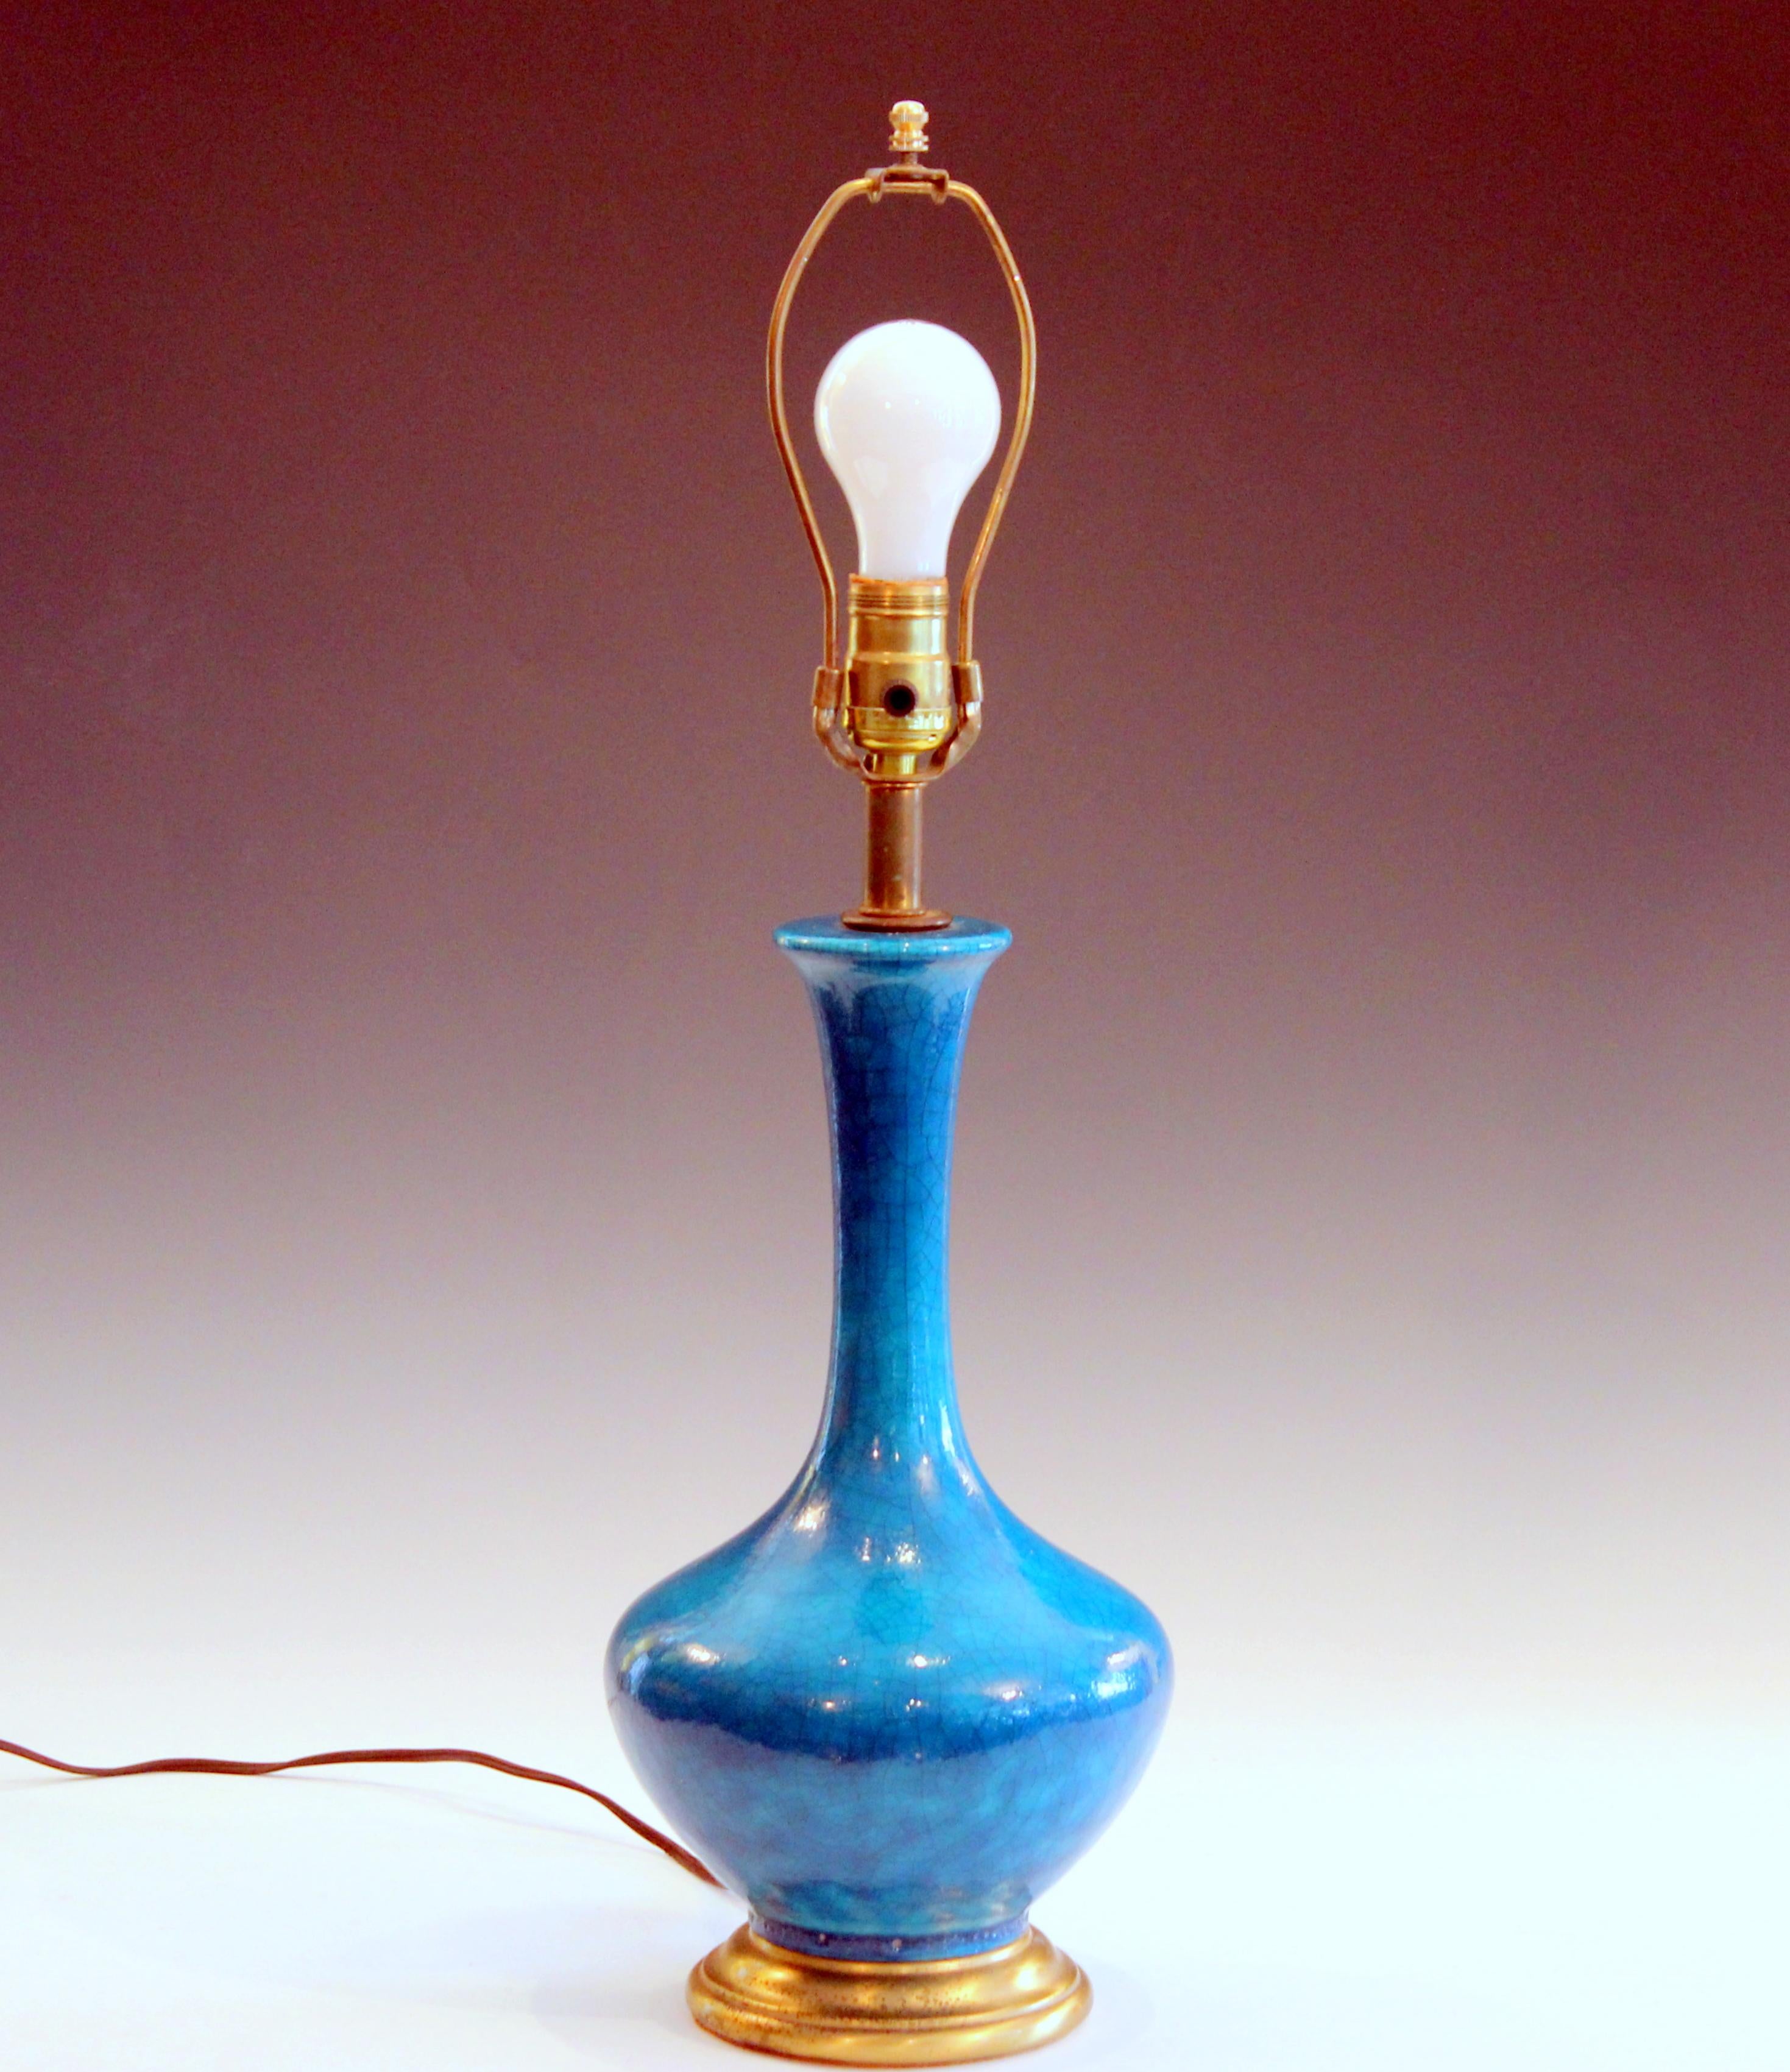 Vintage turquoise crackle glaze lamp in sensuous genie bottle form with heavy crackle glaze, circa 1960s. Measures: 25